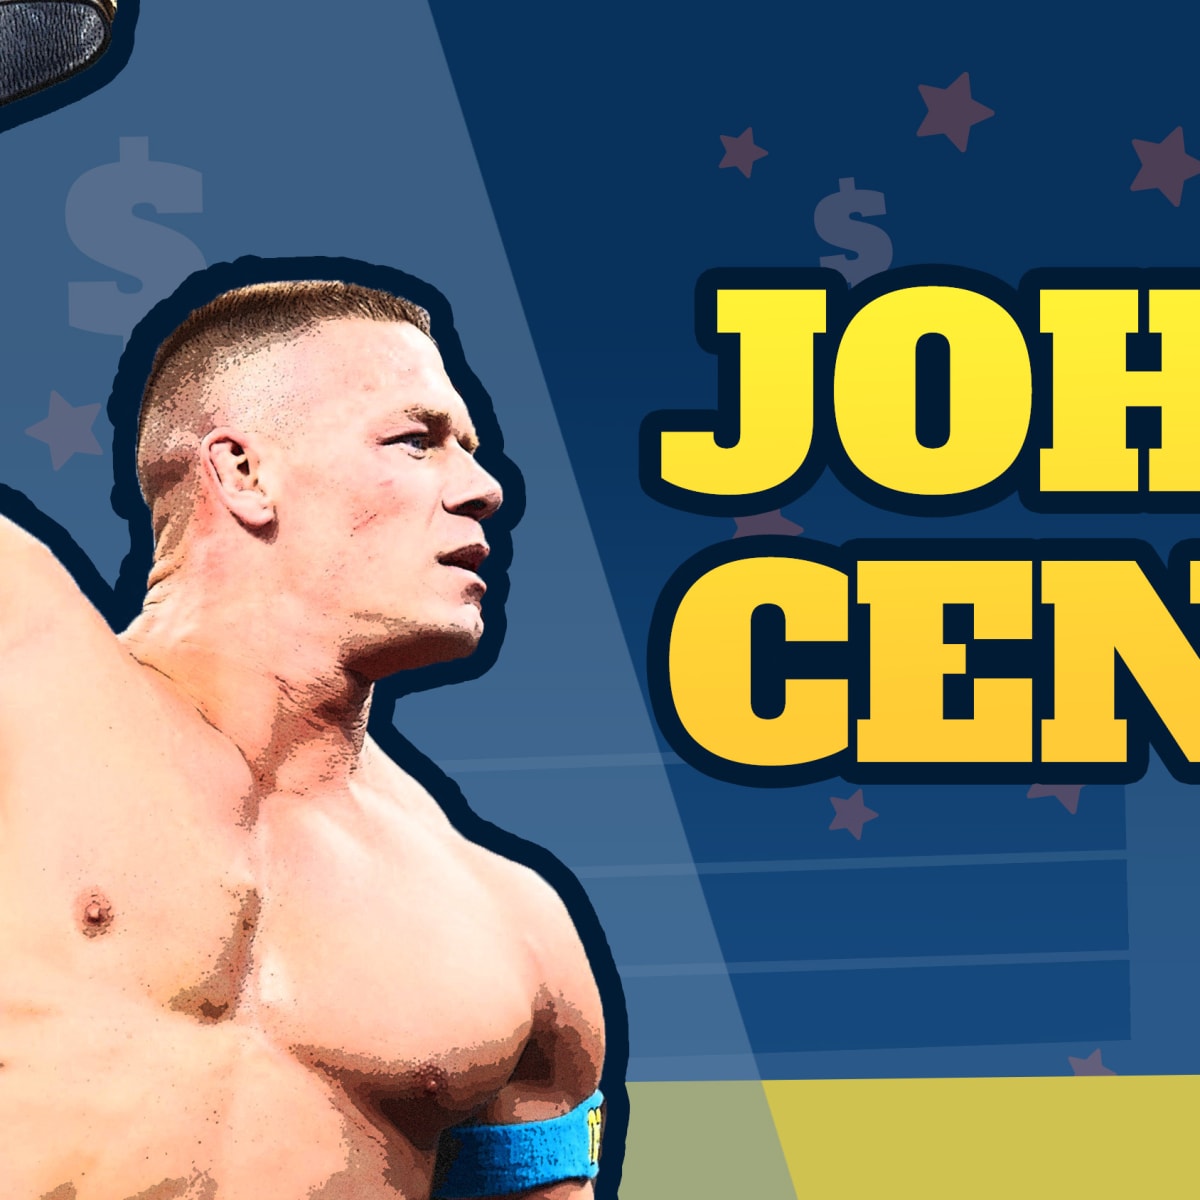 Download free Wwe Superstar John Cena Salute Pose Wallpaper -  MrWallpaper.com